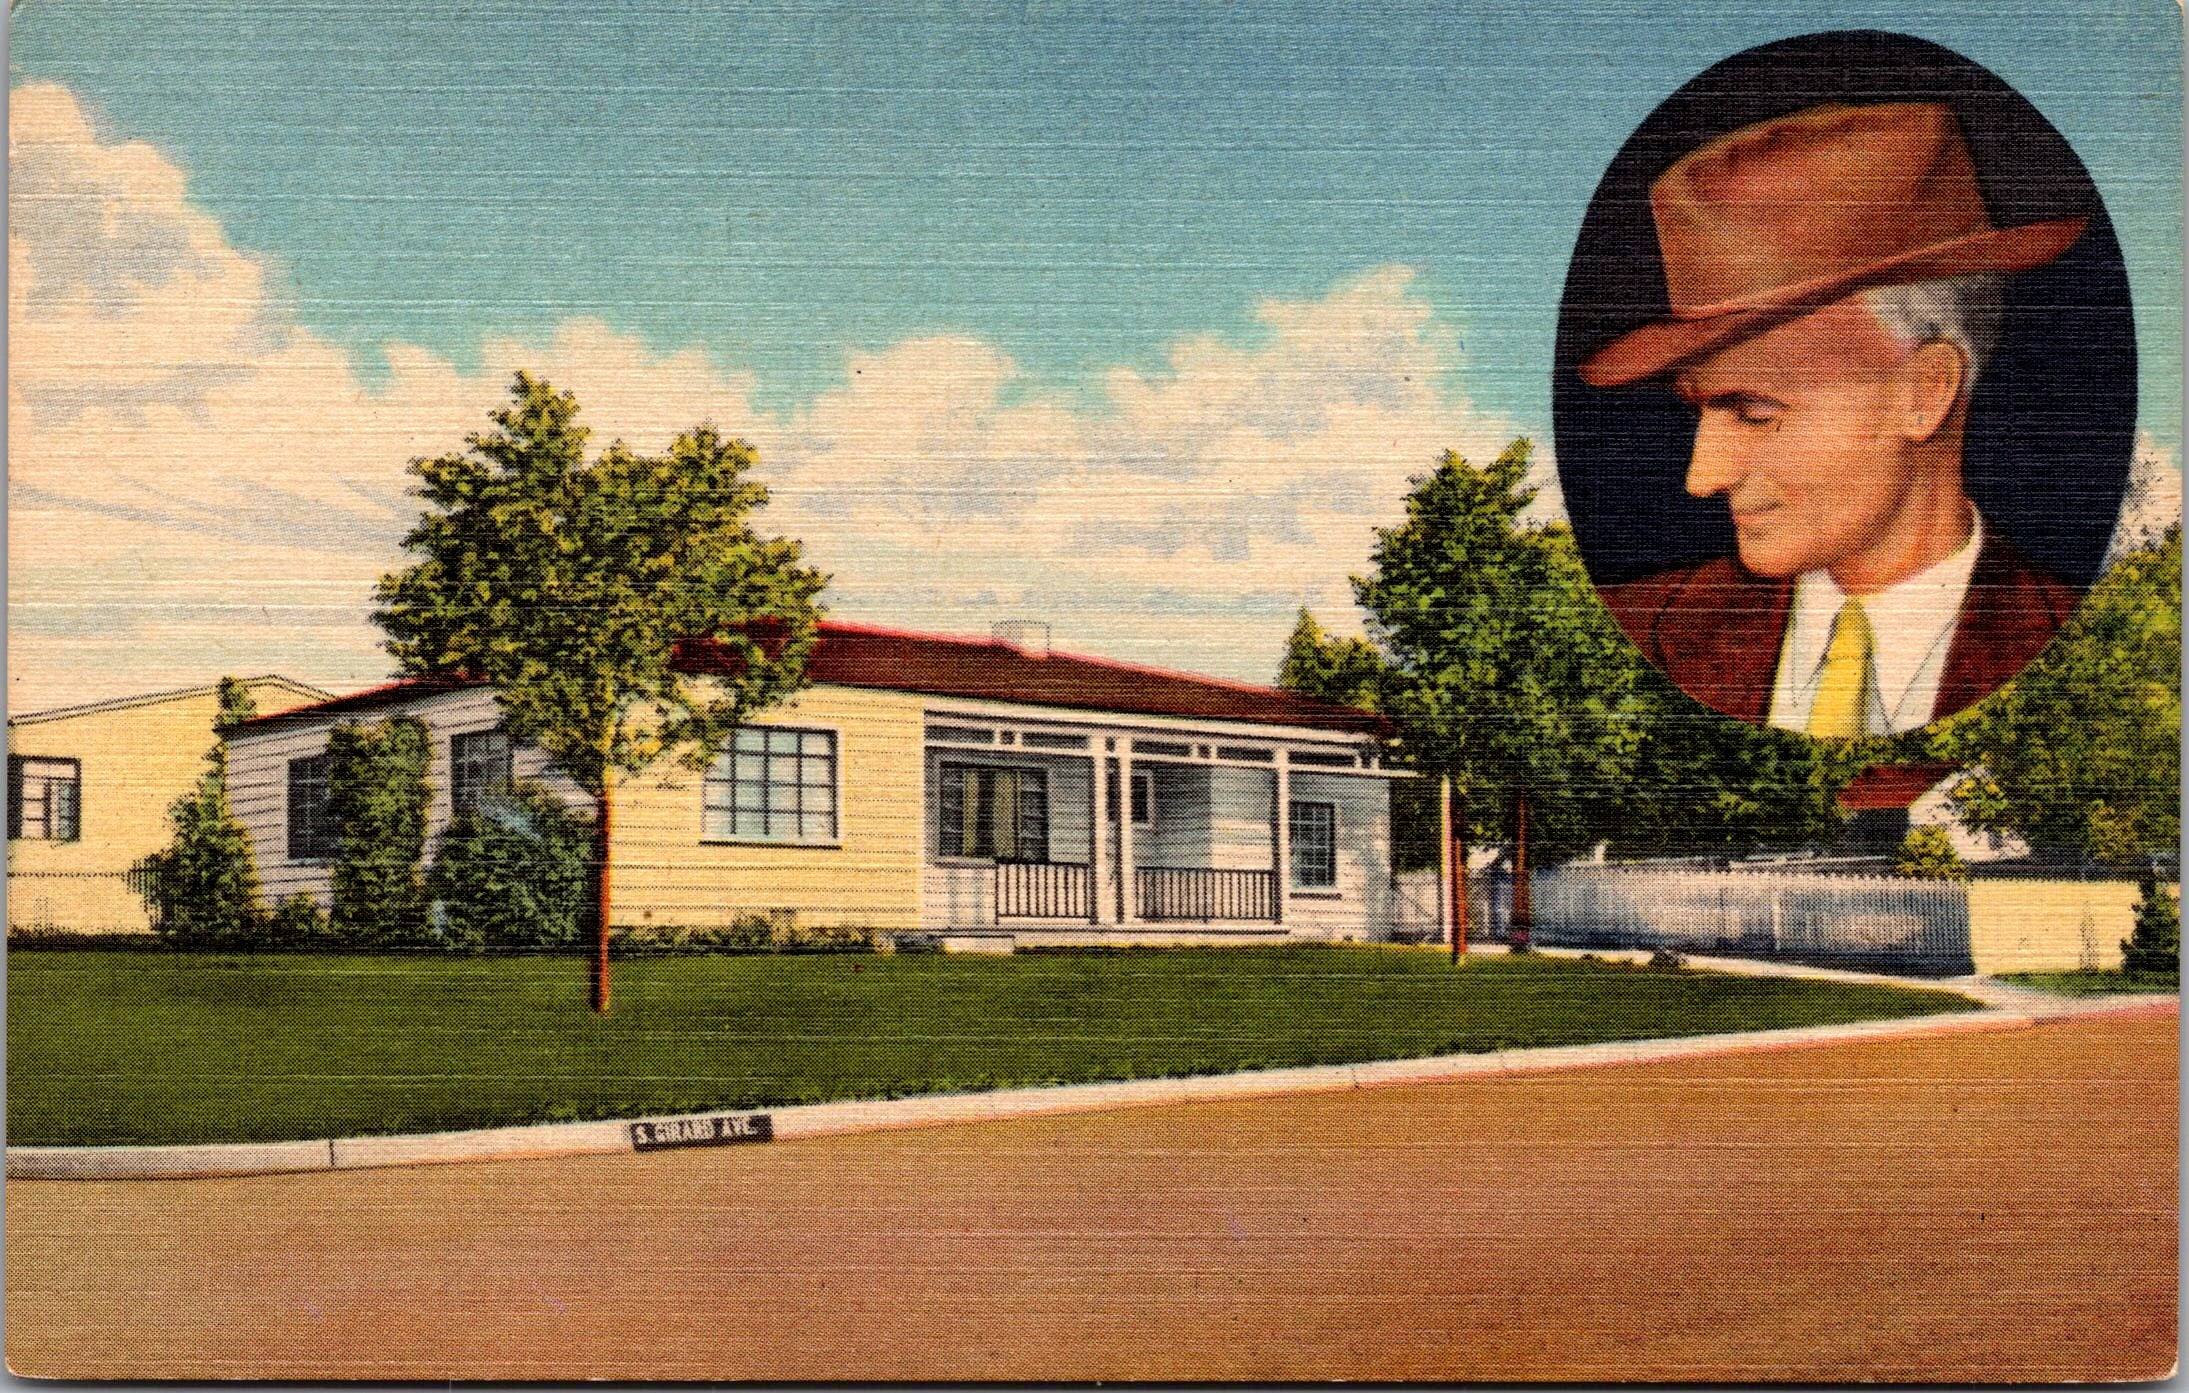 Ernie Pyle’s Home, Albuquerque, New Mexico, USA, Vintage Post Card